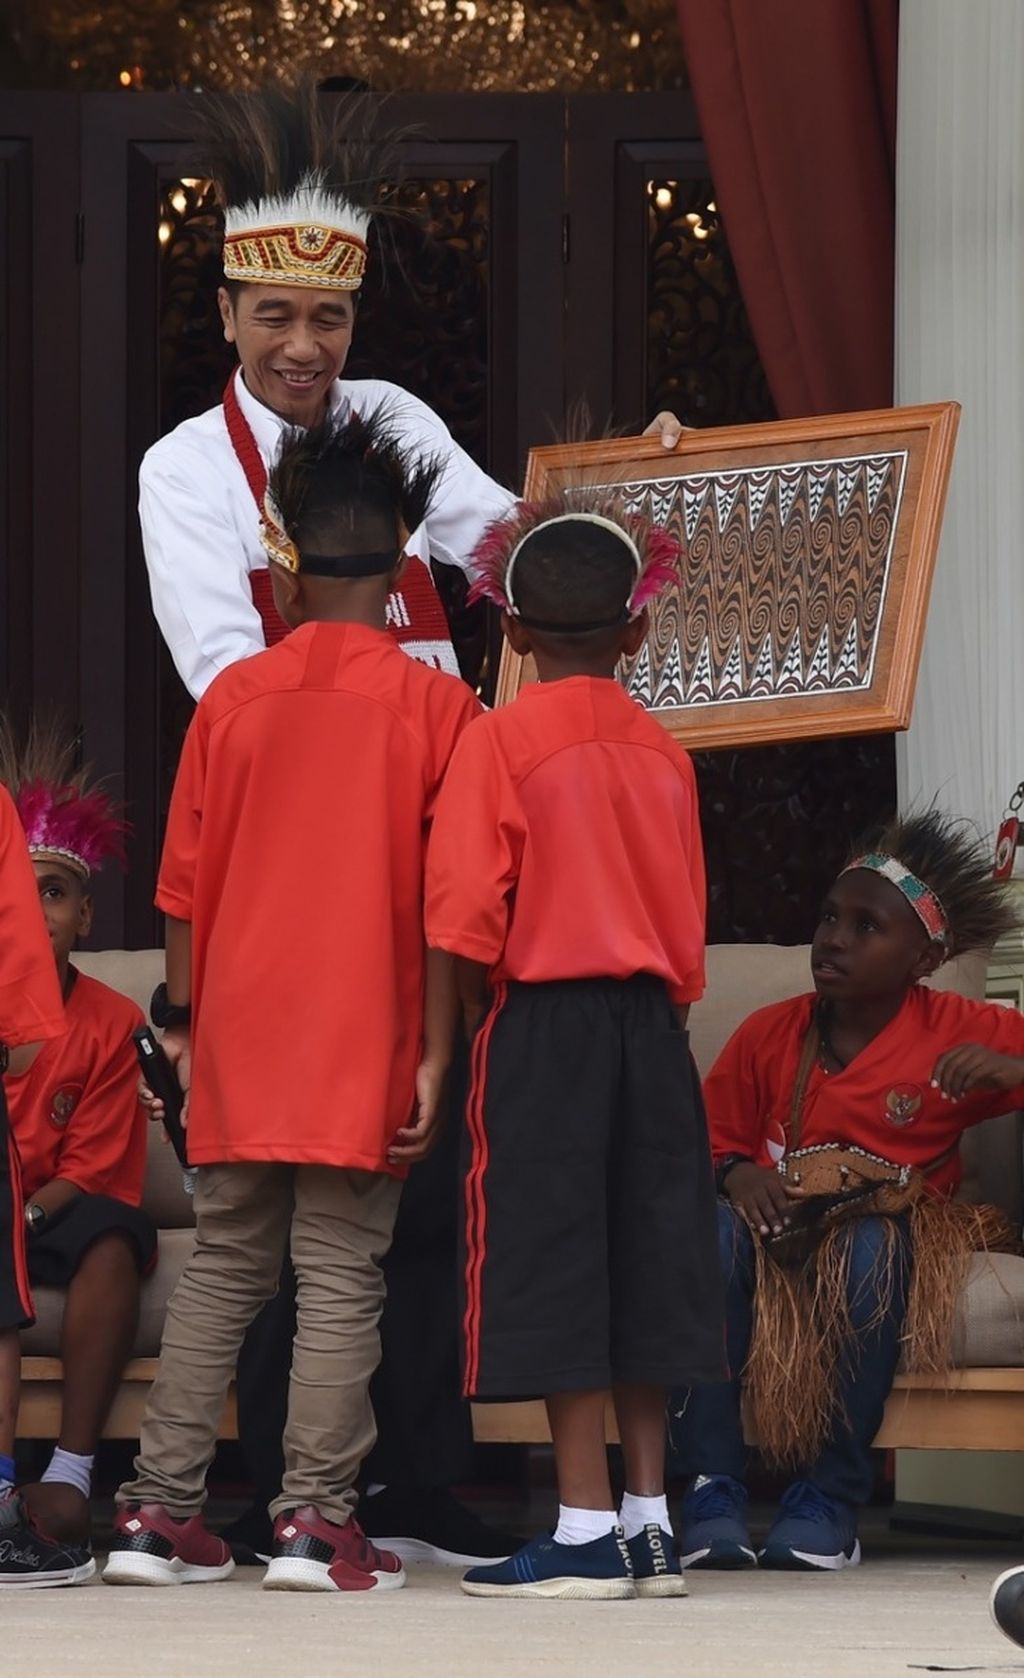 Presiden Joko Widodo menerima 30 siswa perwakilan sekolah dasar Kabupaten Jayapura dan Asmat, Provinsi Papua, di Istana Merdeka, Jakarta, 11 Oktober 2019. Presiden Jokowi mewujudkan janjinya untuk mengundang sejumlah anak-anak asal Papua berkunjung ke ibu kota, Jakarta.